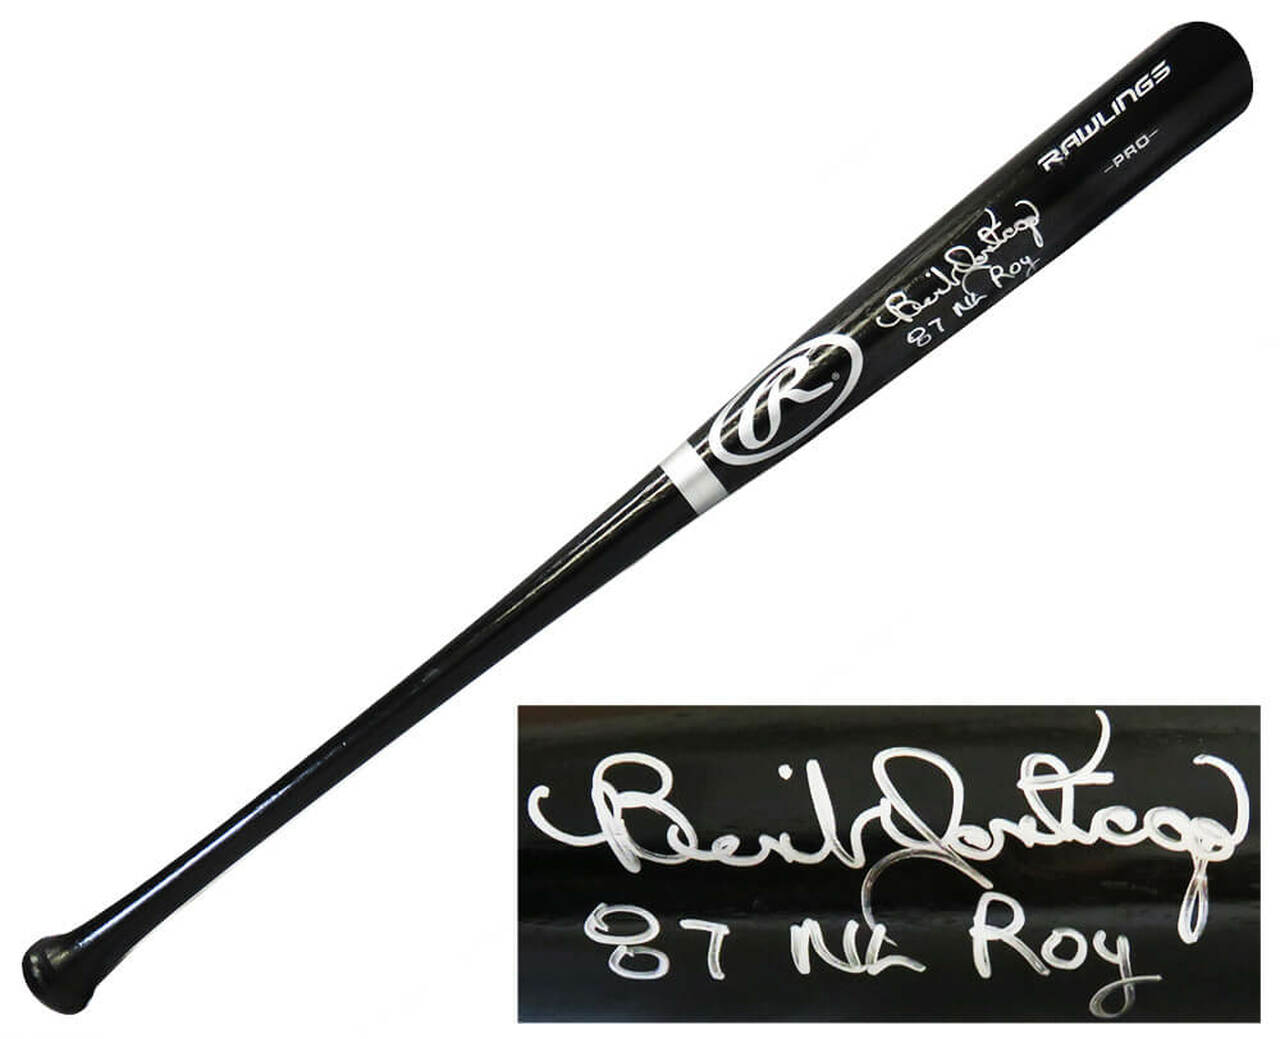 Benito Santiago Signed Rawlings Pro Black Baseball Bat with "87 NL ROY" Inscription